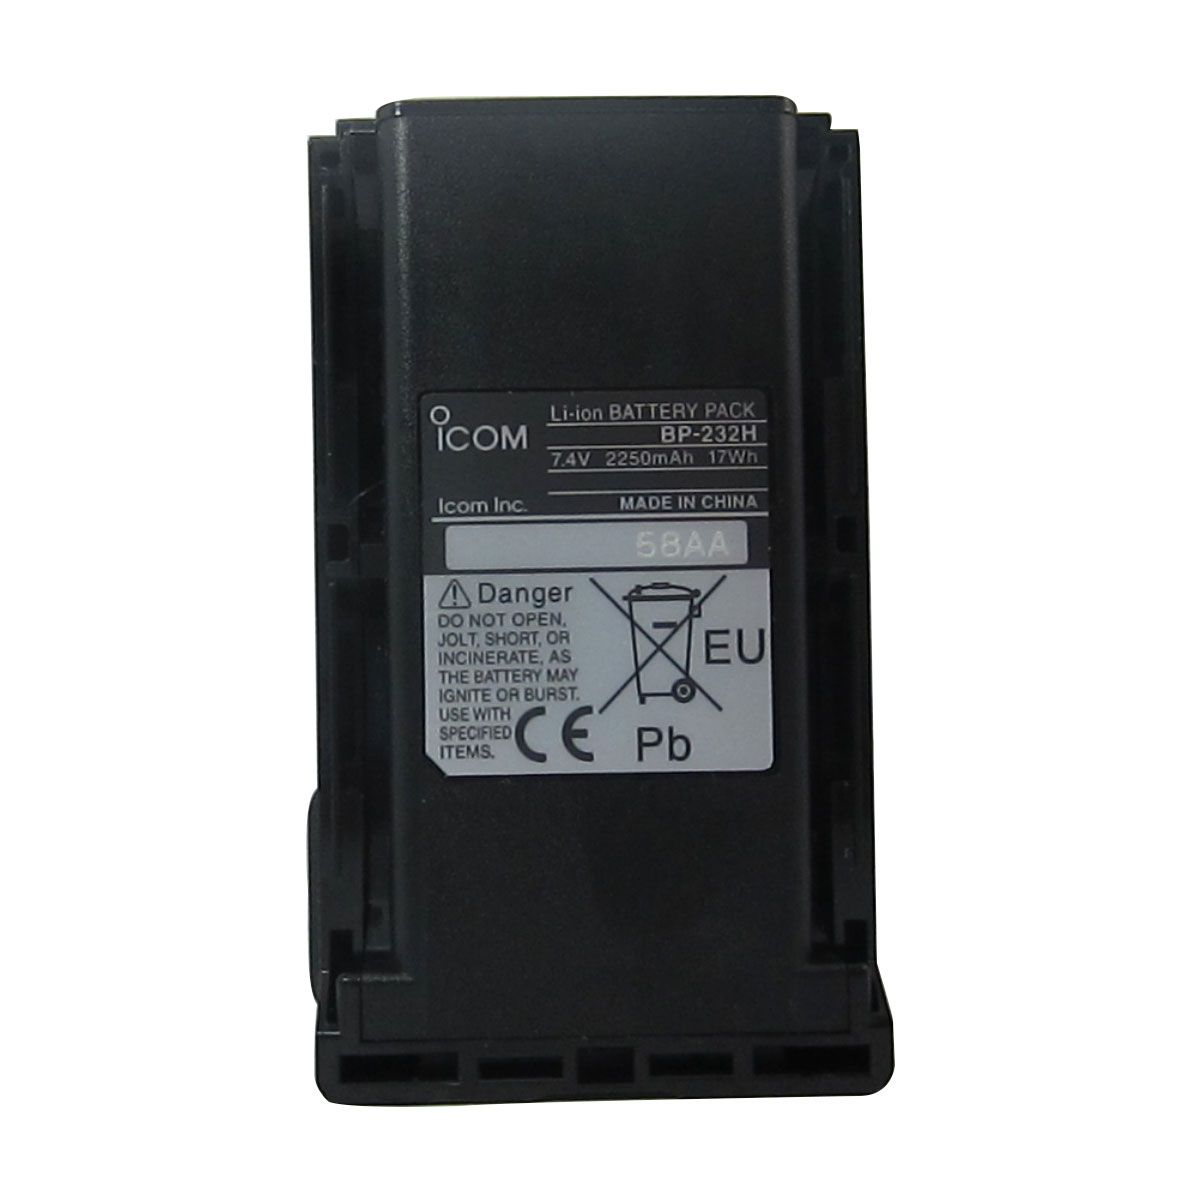 Batería Icom Li-Ion 2250 mAh para radio IC-F3013 y IC-F4013 BP-232H